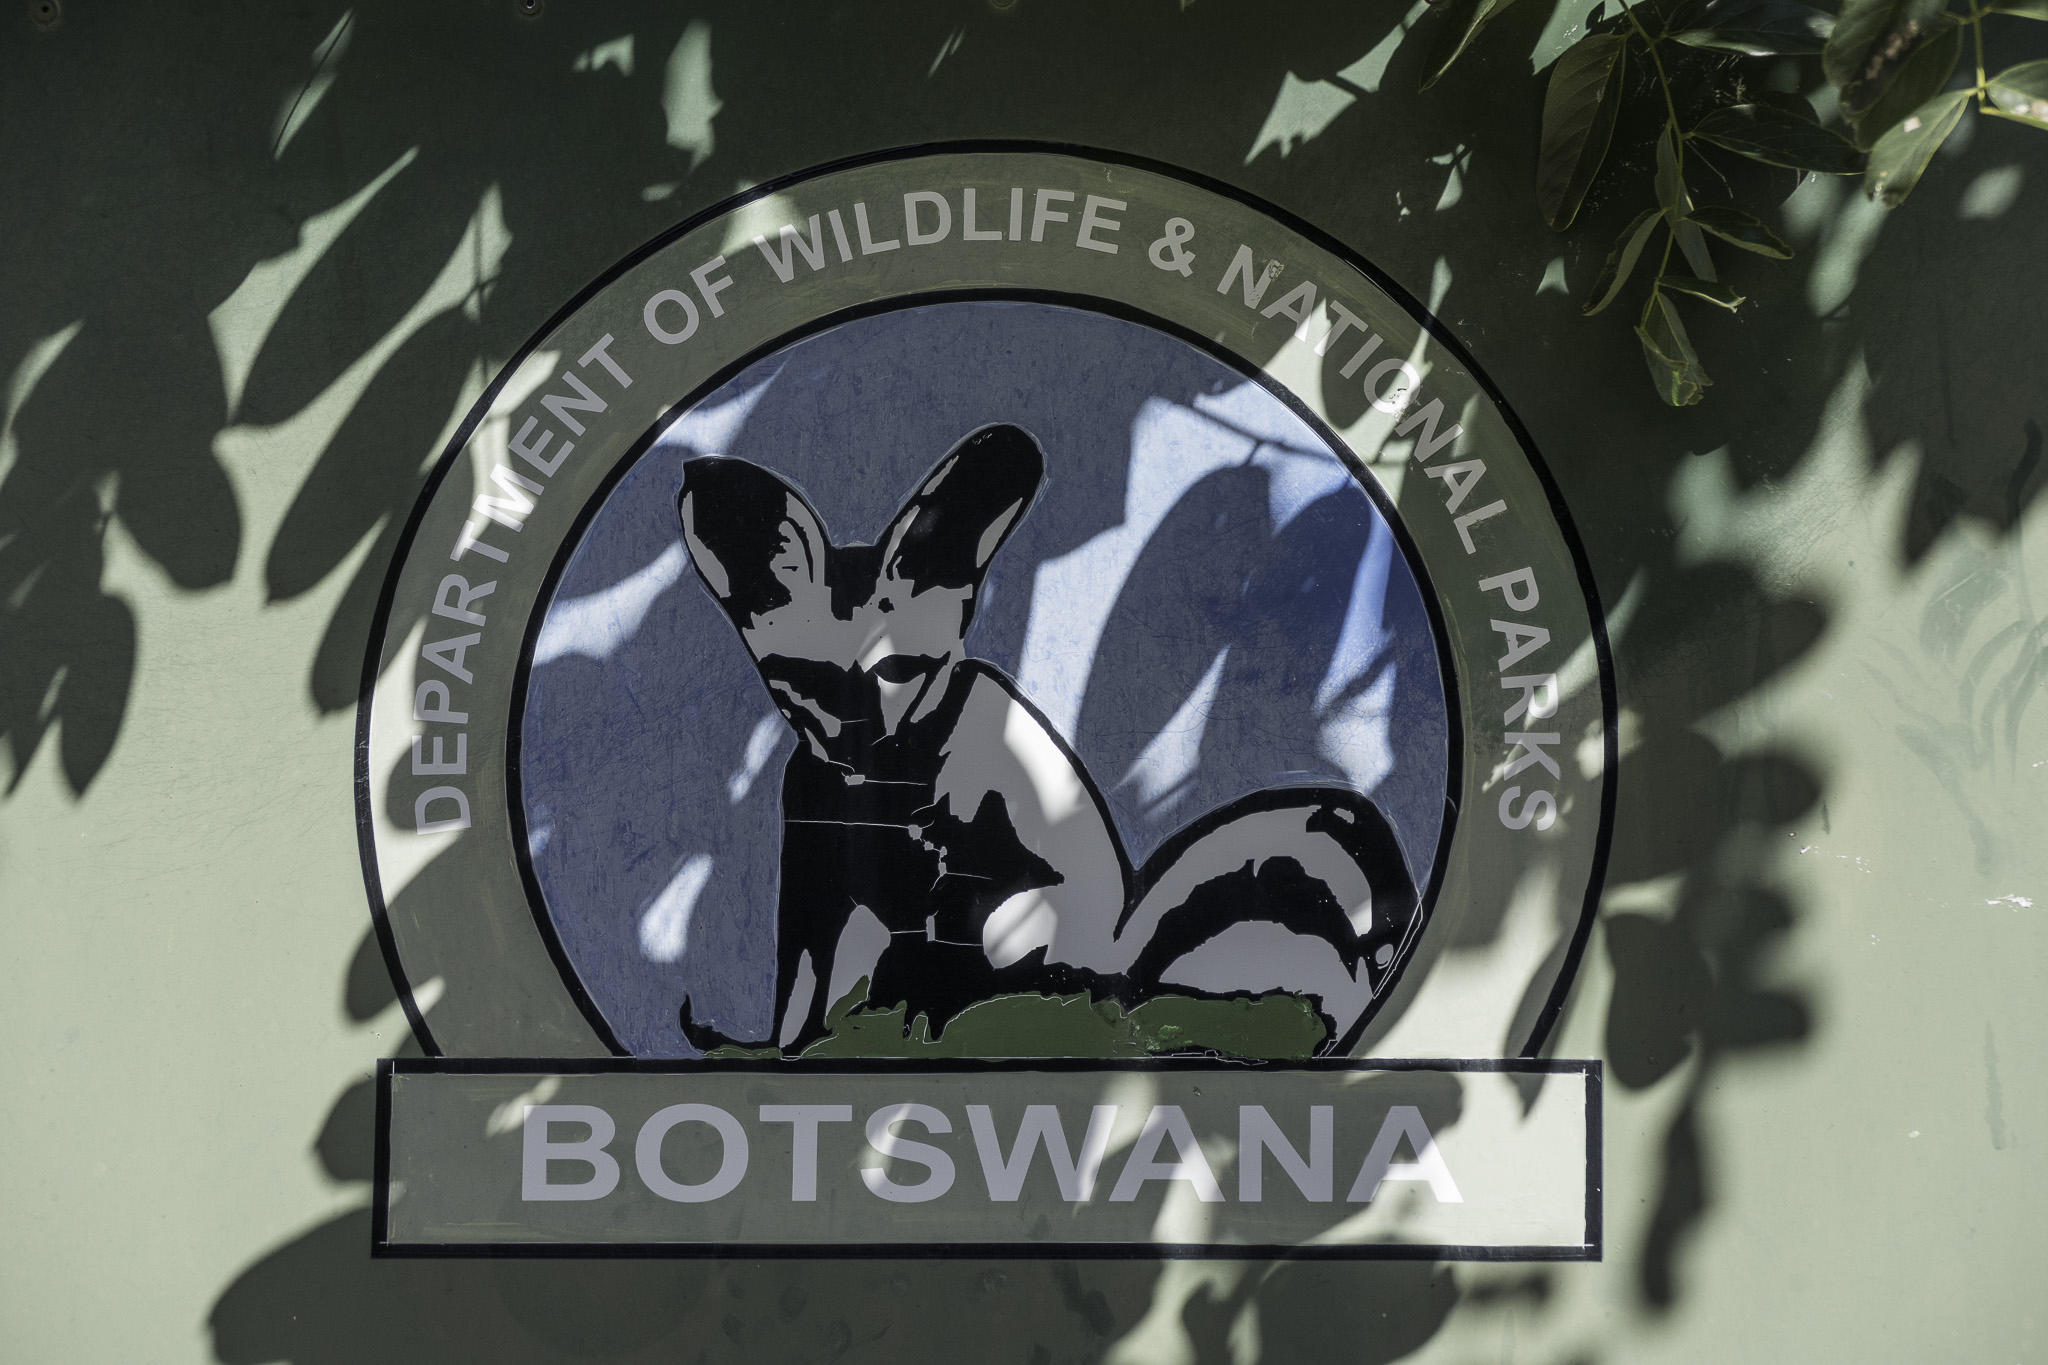 Botswana-L-22.jpg